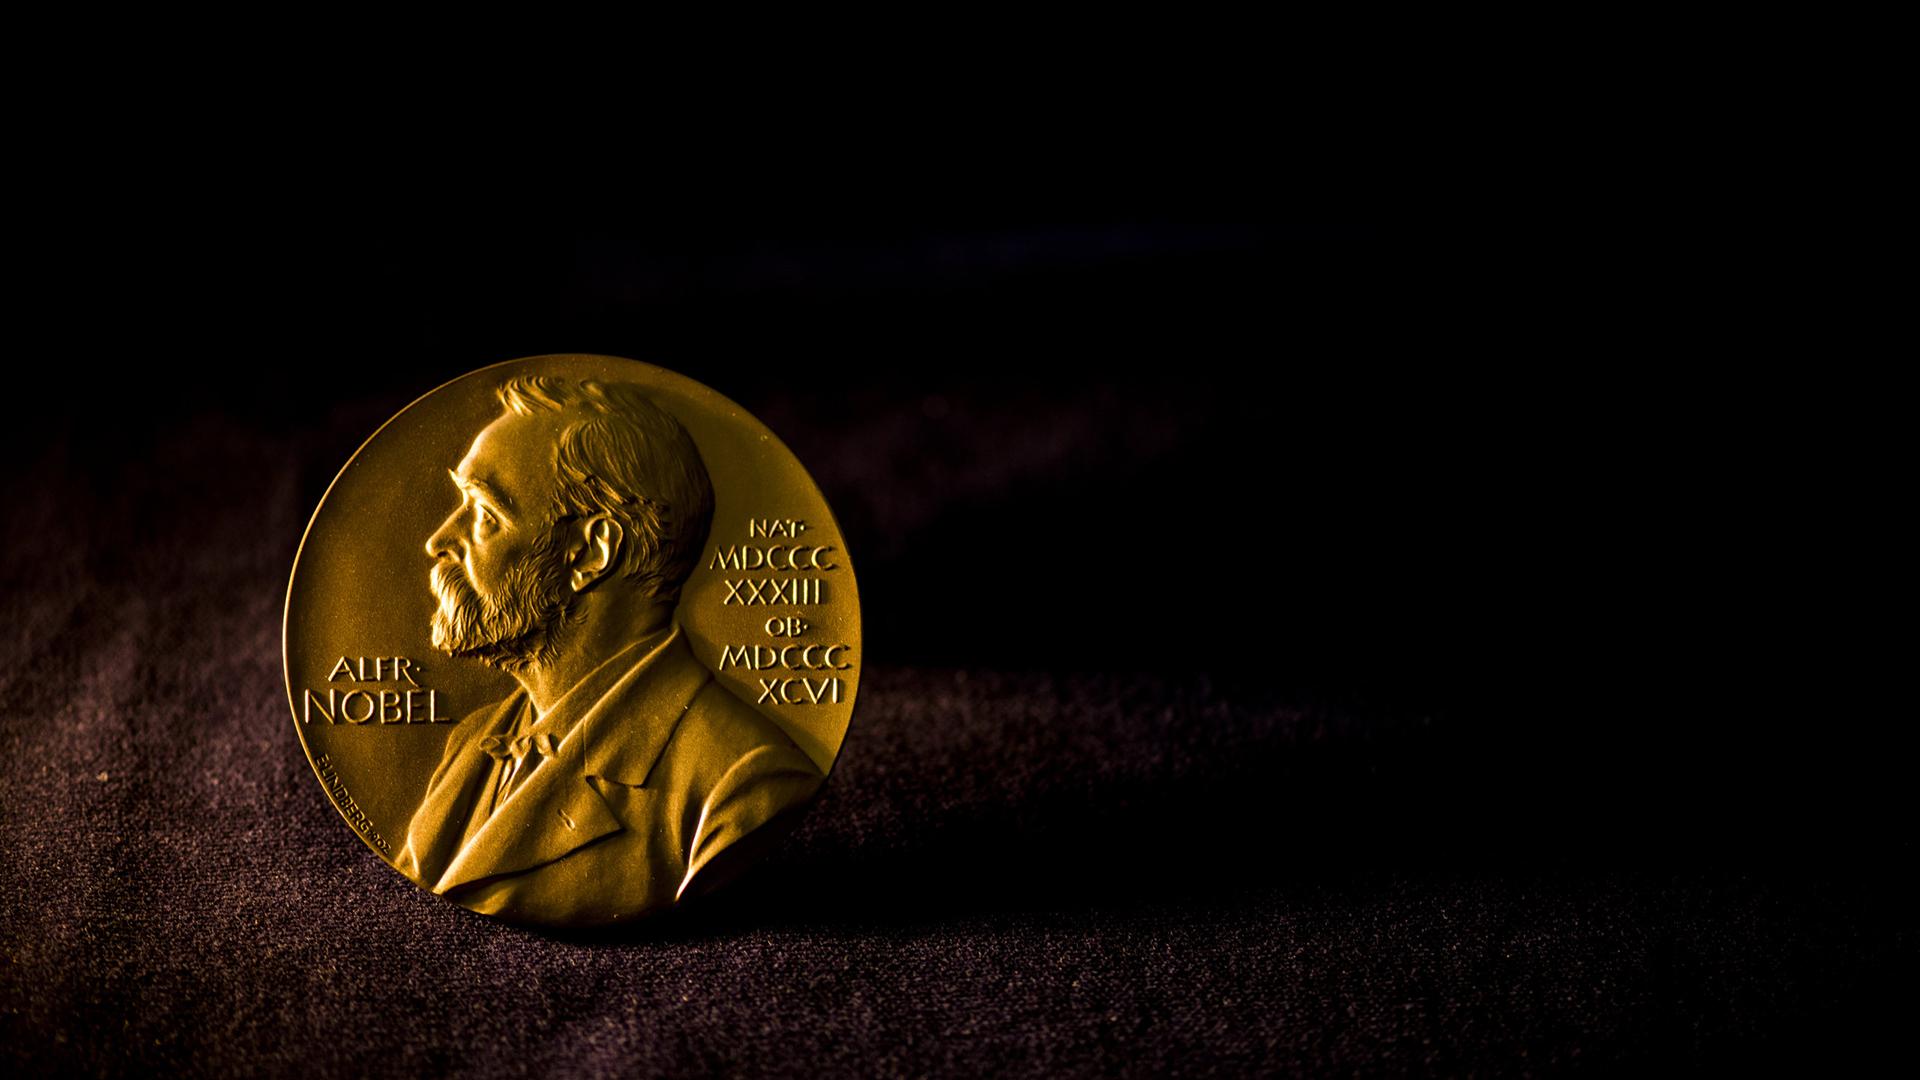 Solo seis de cada cien premios Nobel son mujeres